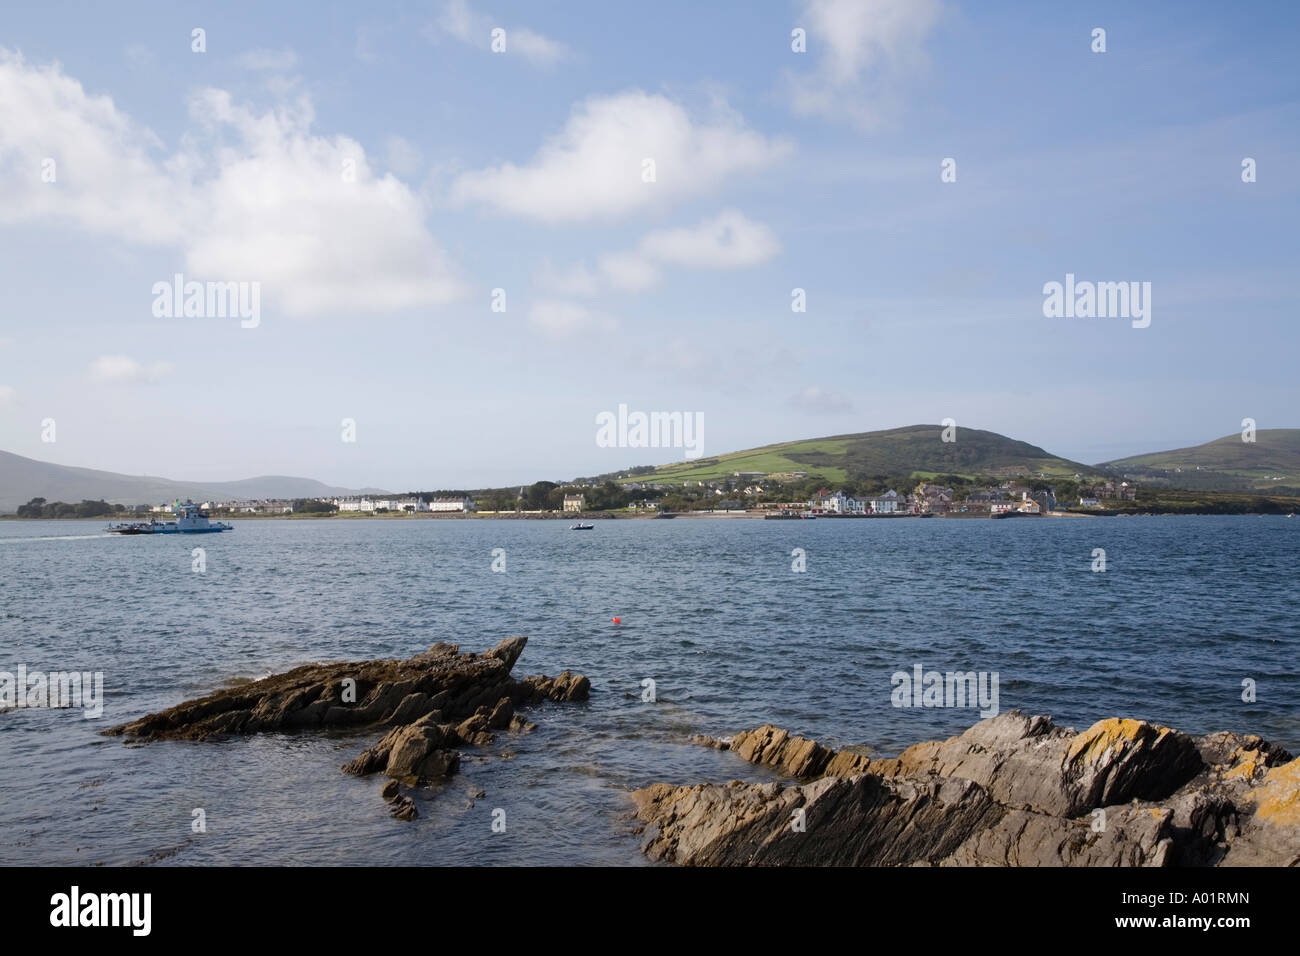 Blick über Meerenge in Knightstown auf Valentia Island vom "Ring of Kerry" Touristenroute Cahersiveen Co Kerry Irland Stockfoto